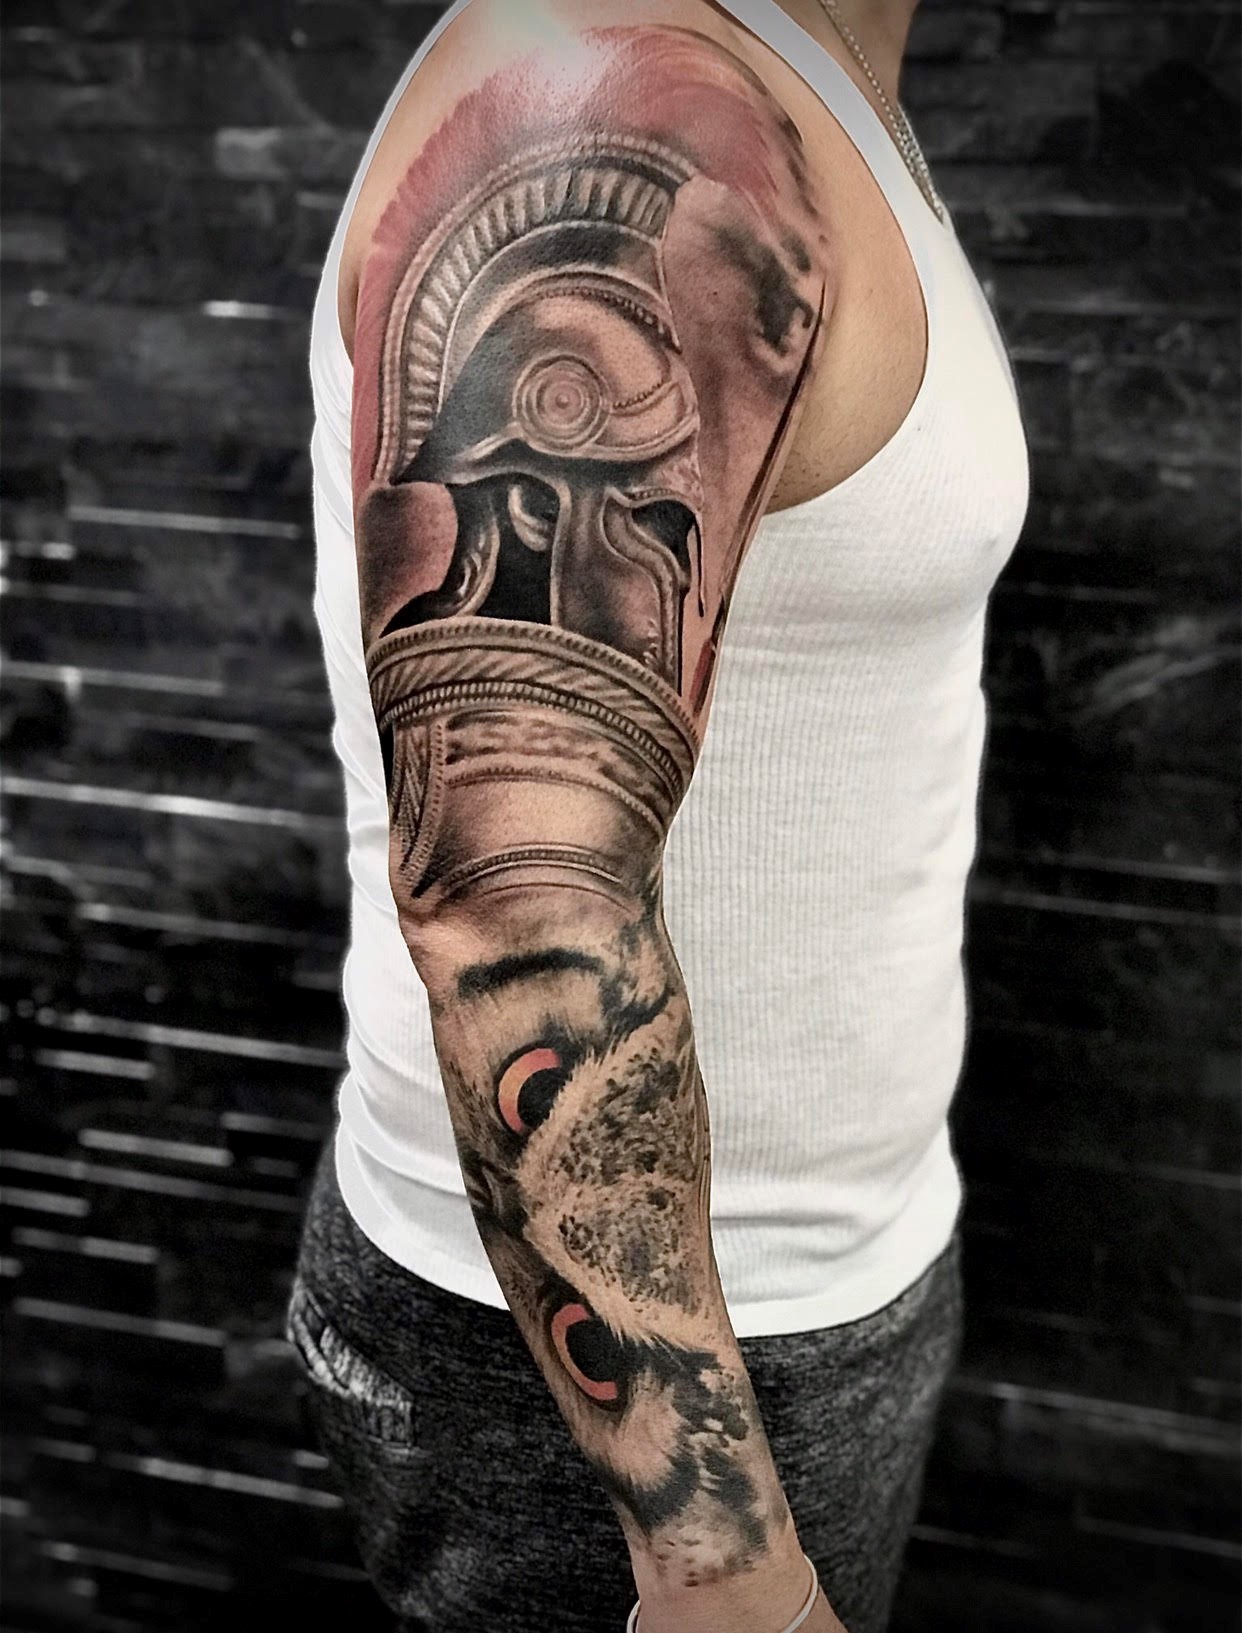 Tattoo uploaded by level ink tattoos • spartan tattoo by @levelinktattoos •  Tattoodo